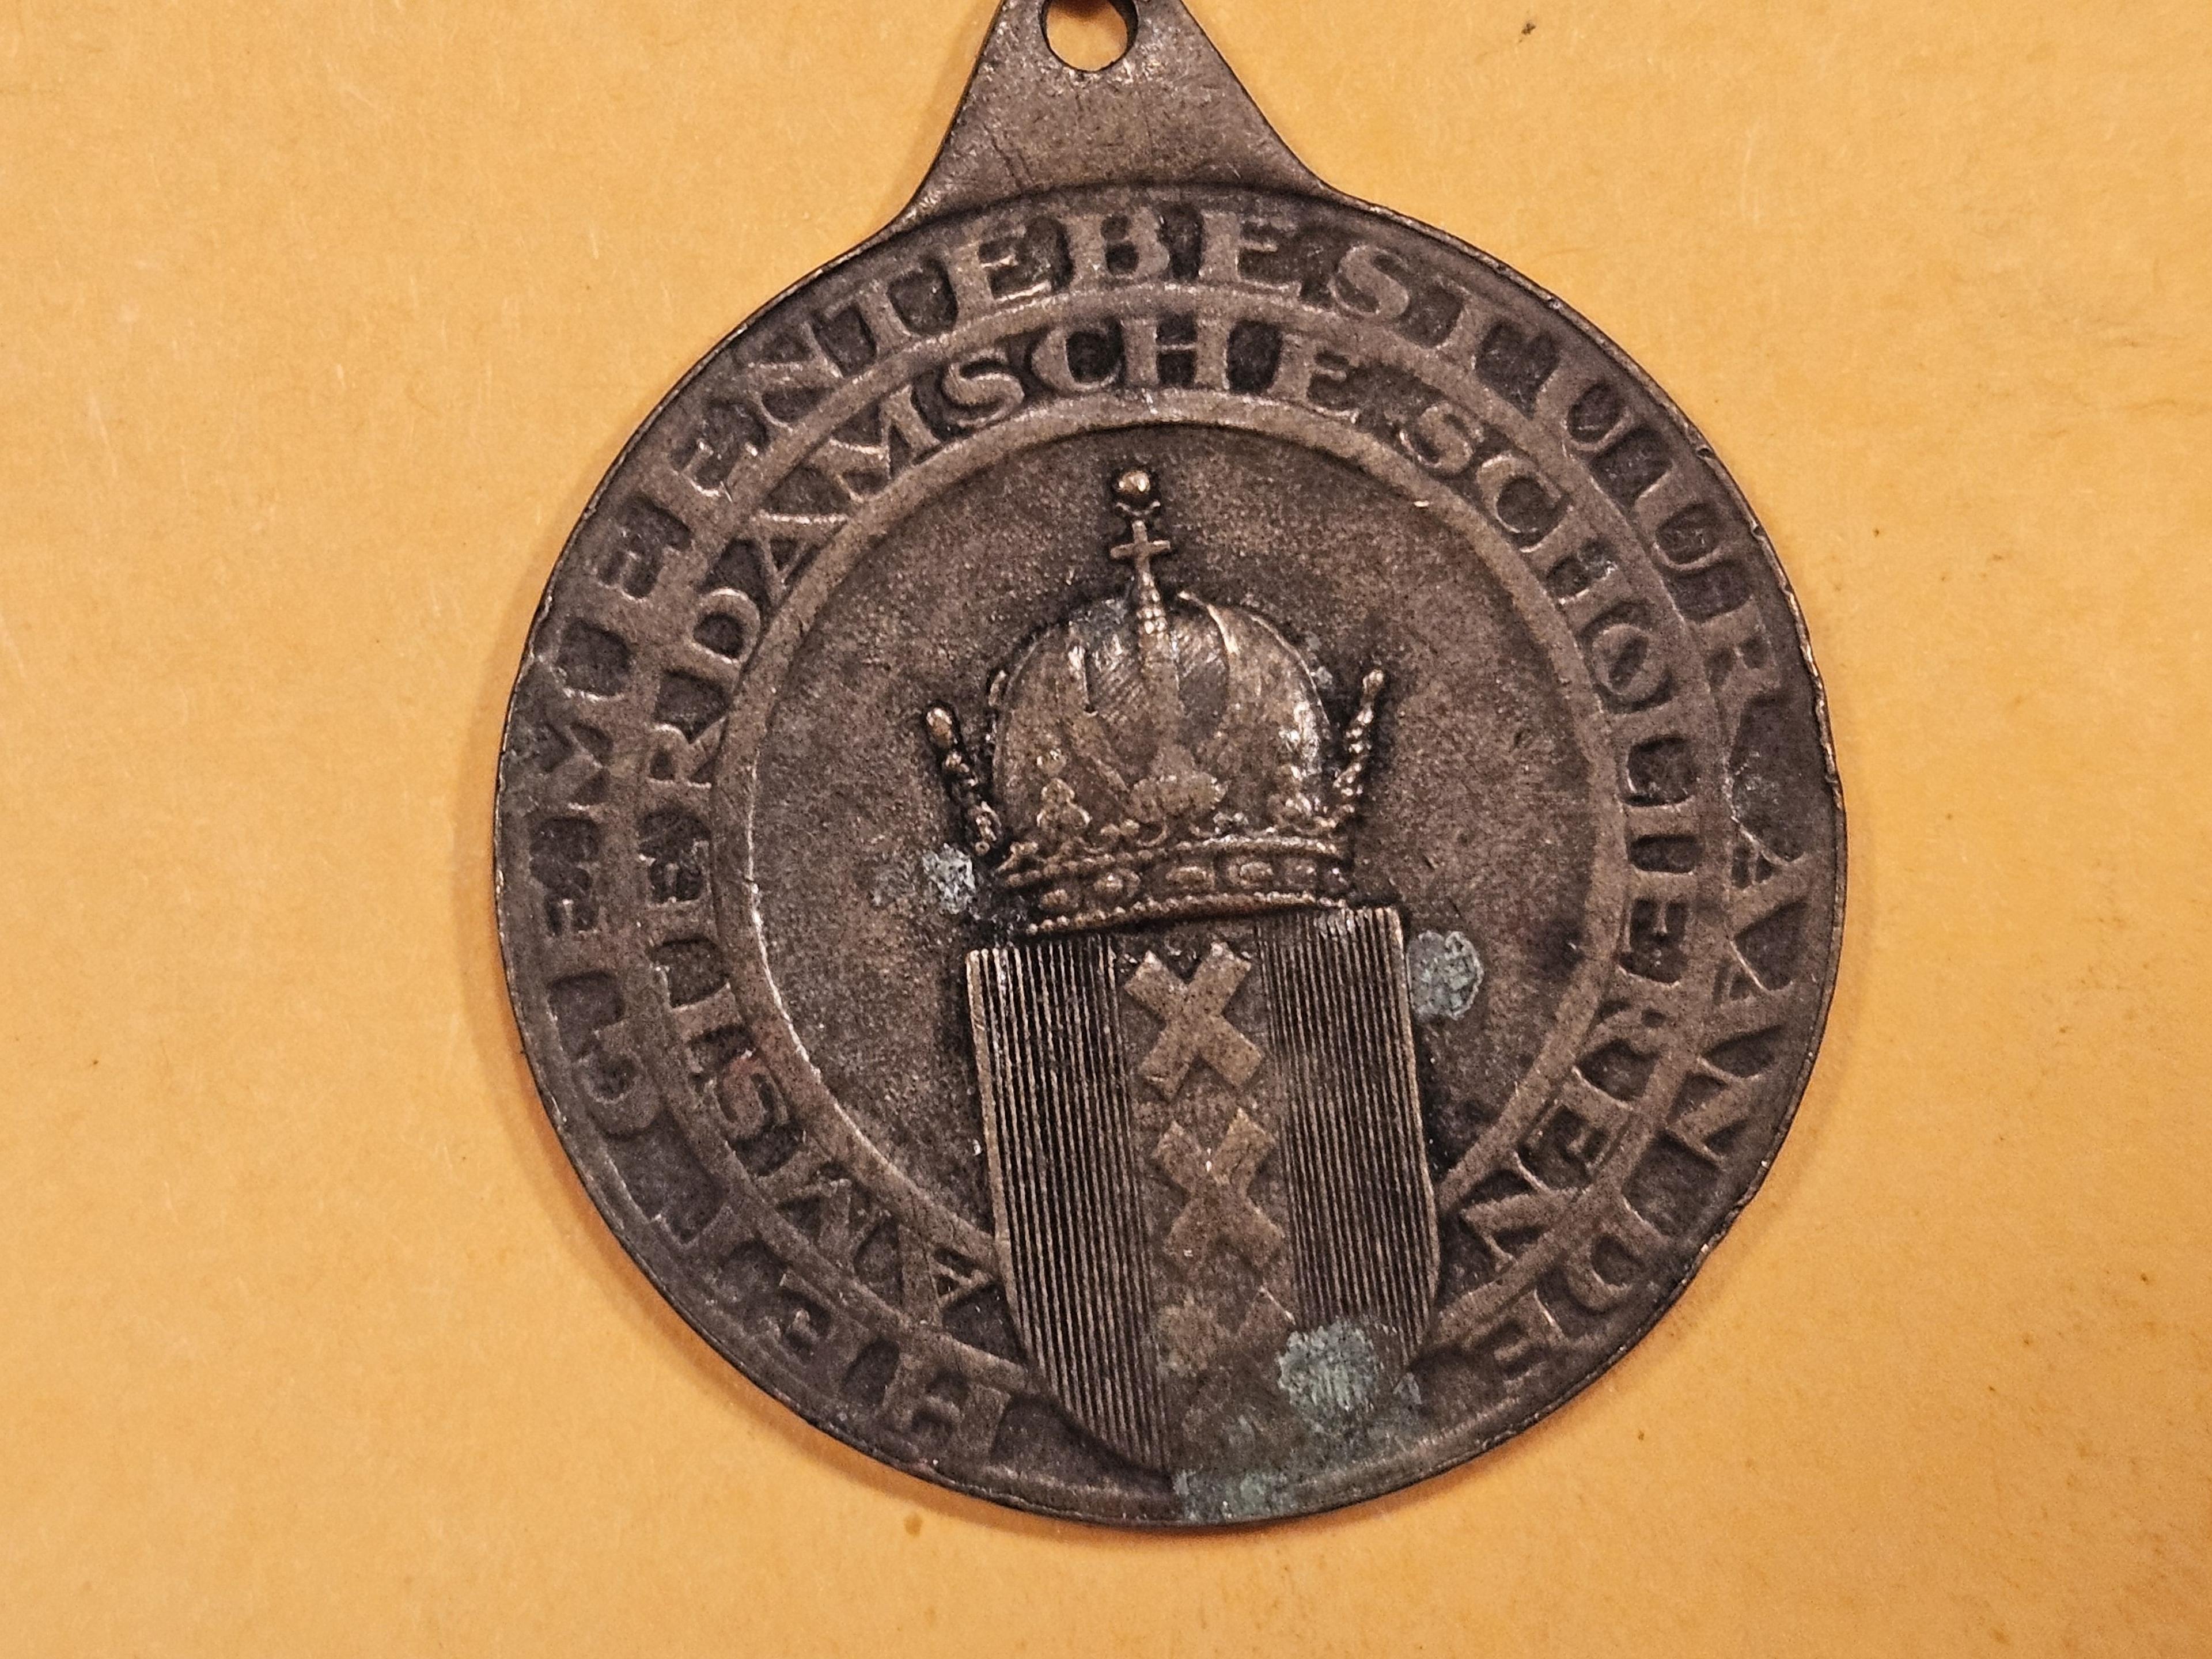 Cool 1937 medal